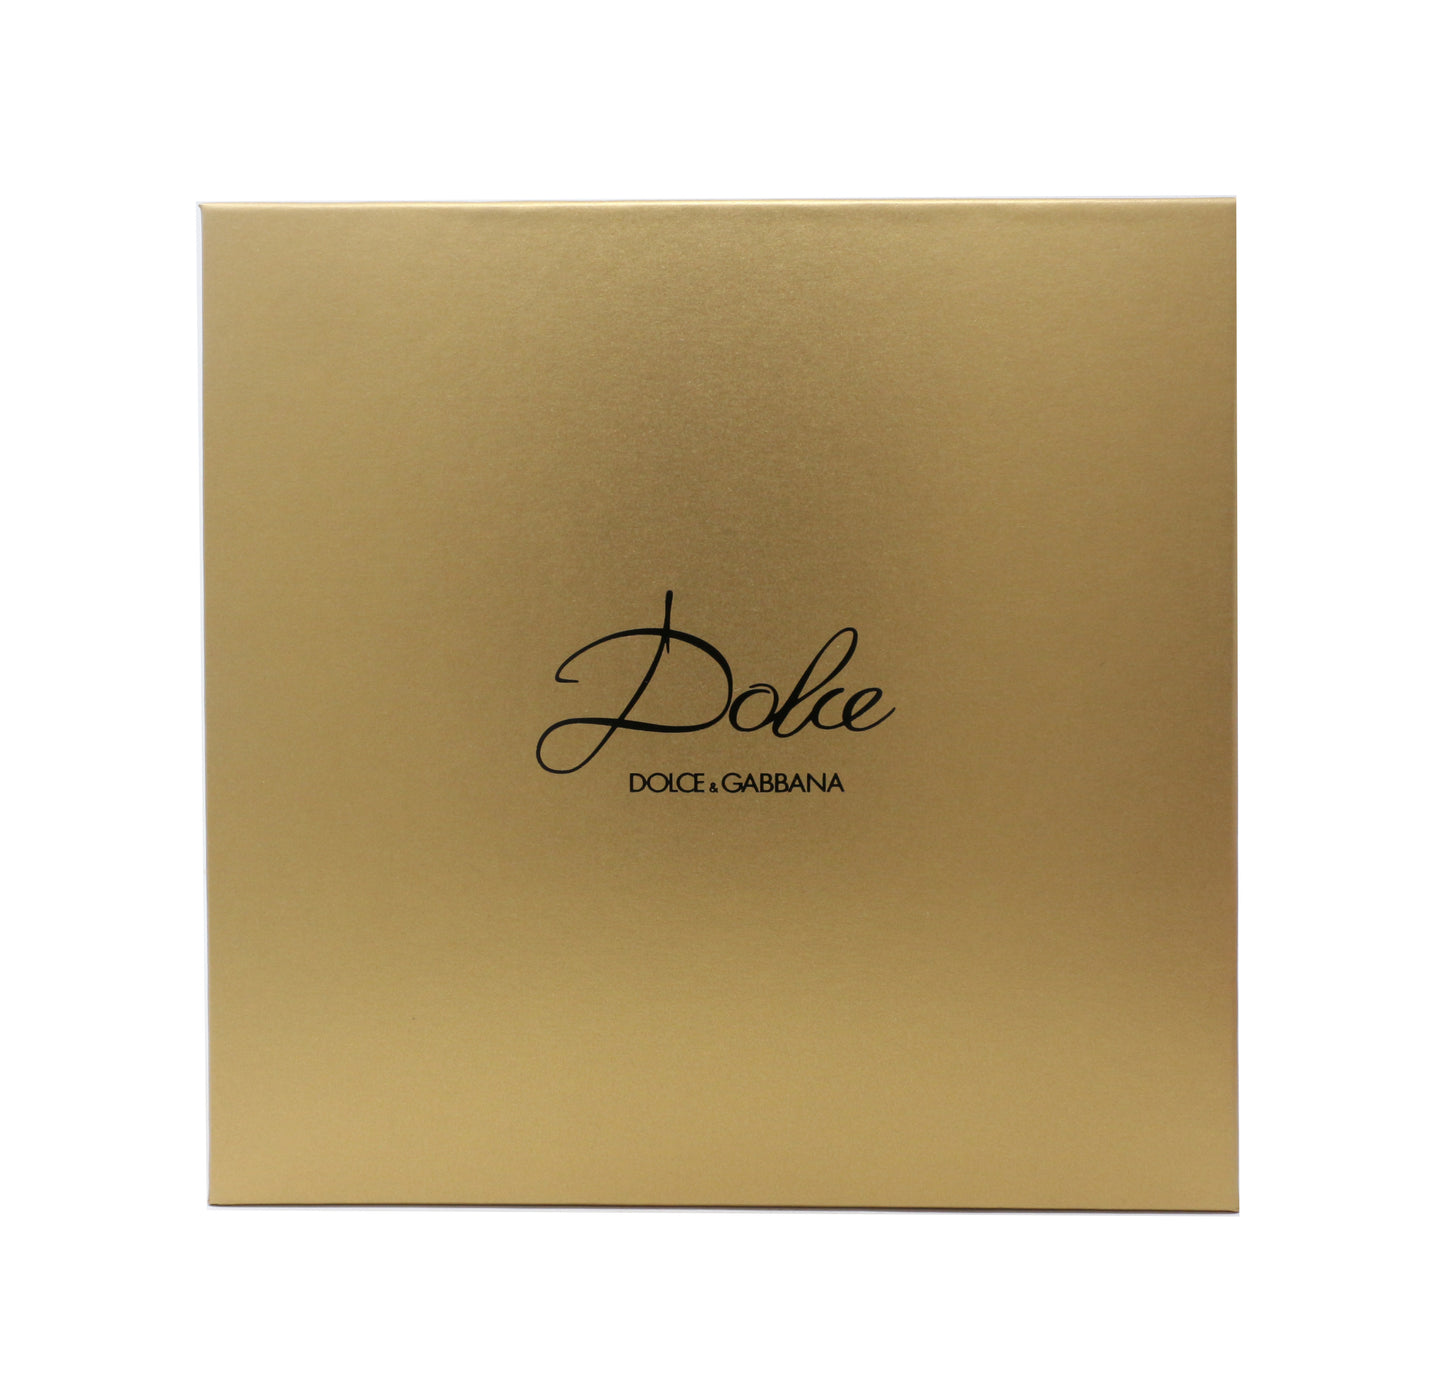 Dolce & Gabbana Dolce 3-Piece Gift Set New In Box